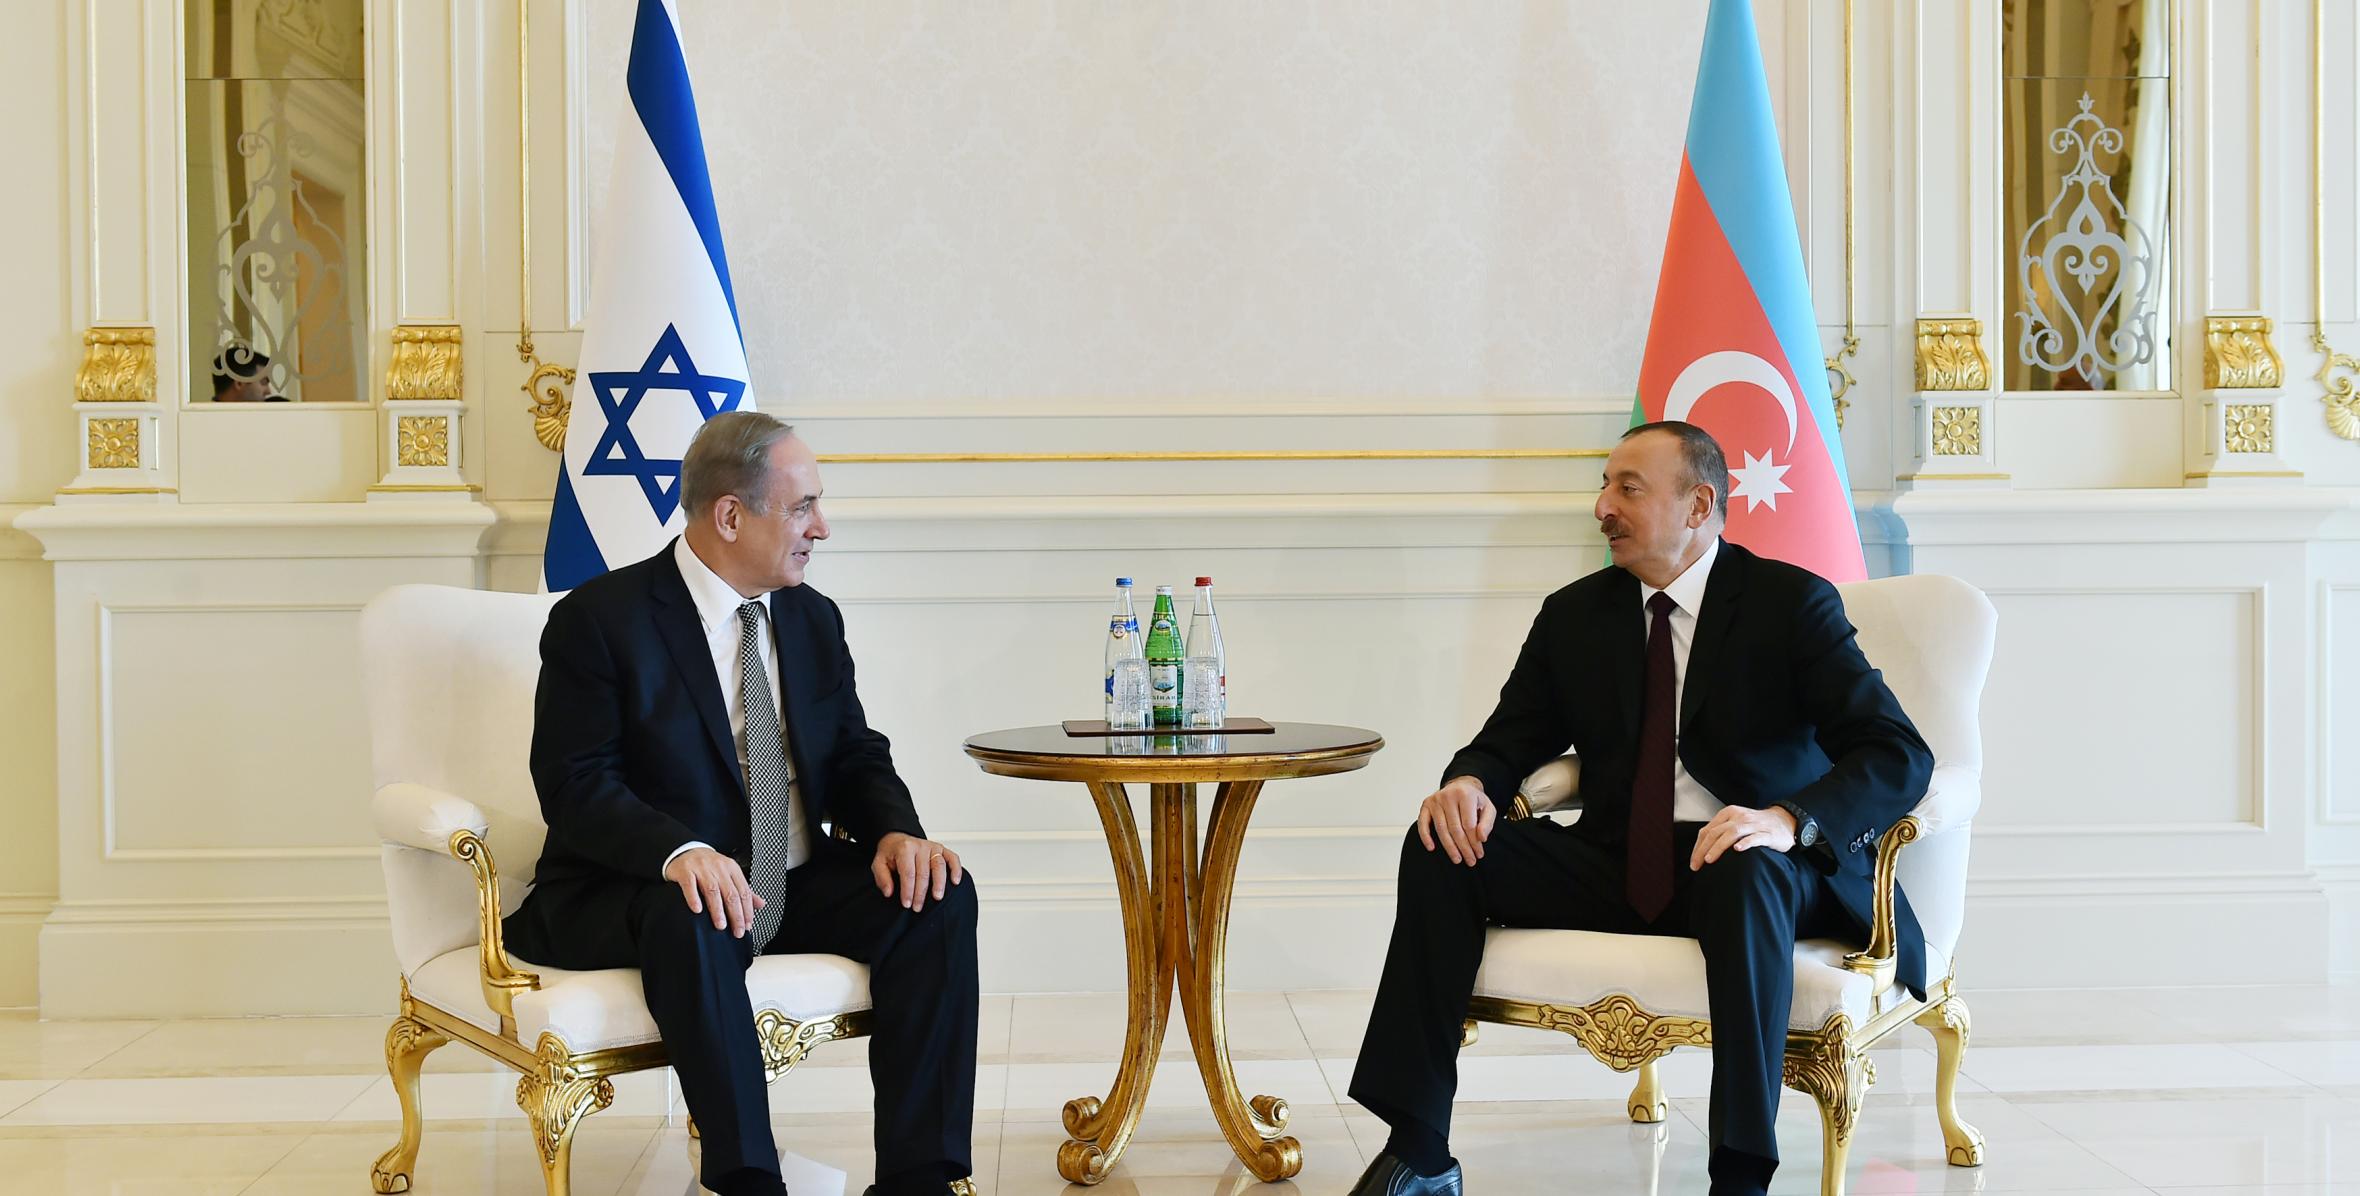 Ilham Aliyev and Prime Minister of Israel Benjamin Netanyahu held one-on-one meeting